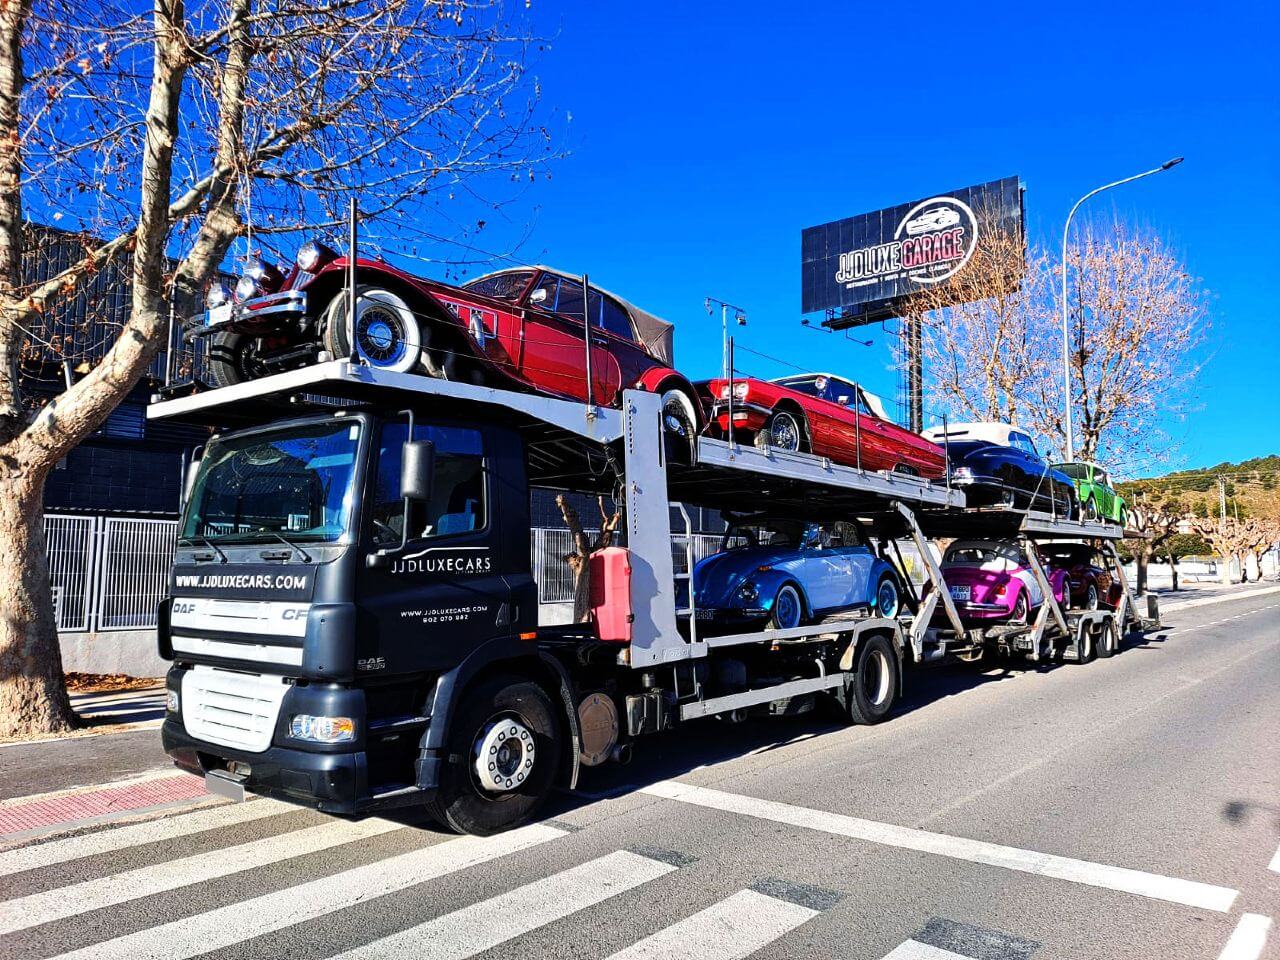 transporte-de-coches-camion-abierto-vehiculos-jjdluxe-garage-2